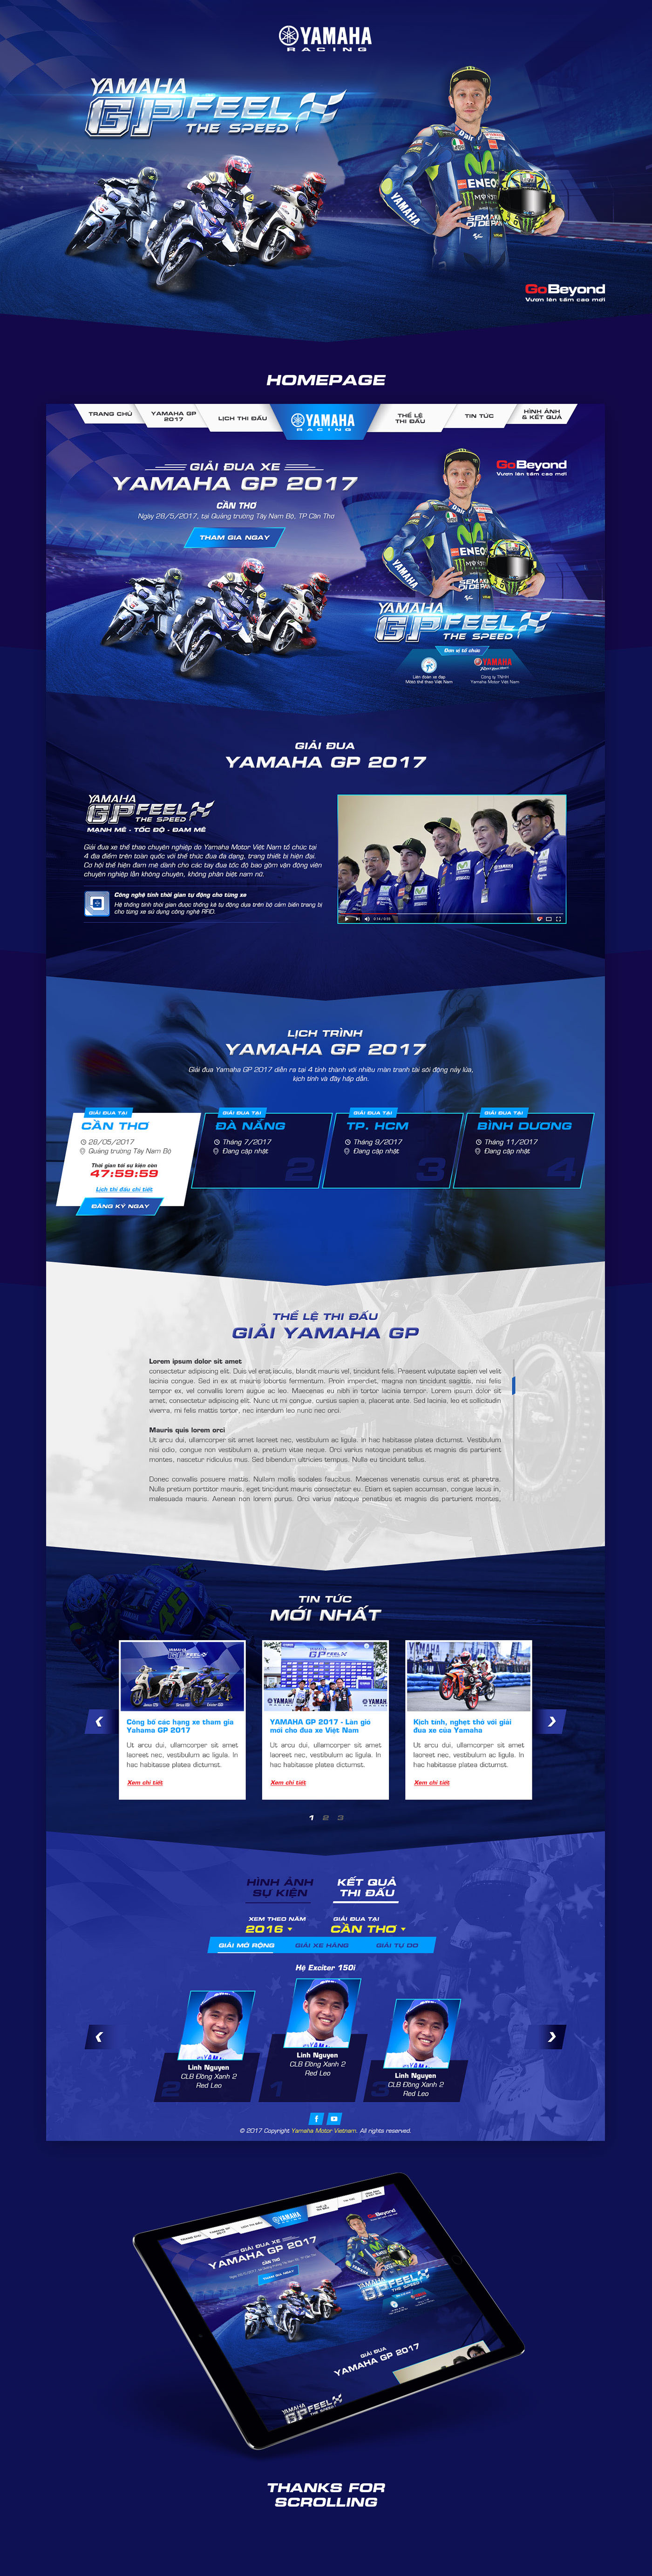 yamaha Racing GP 2017 rossi minhgia nhutminhgd digitop